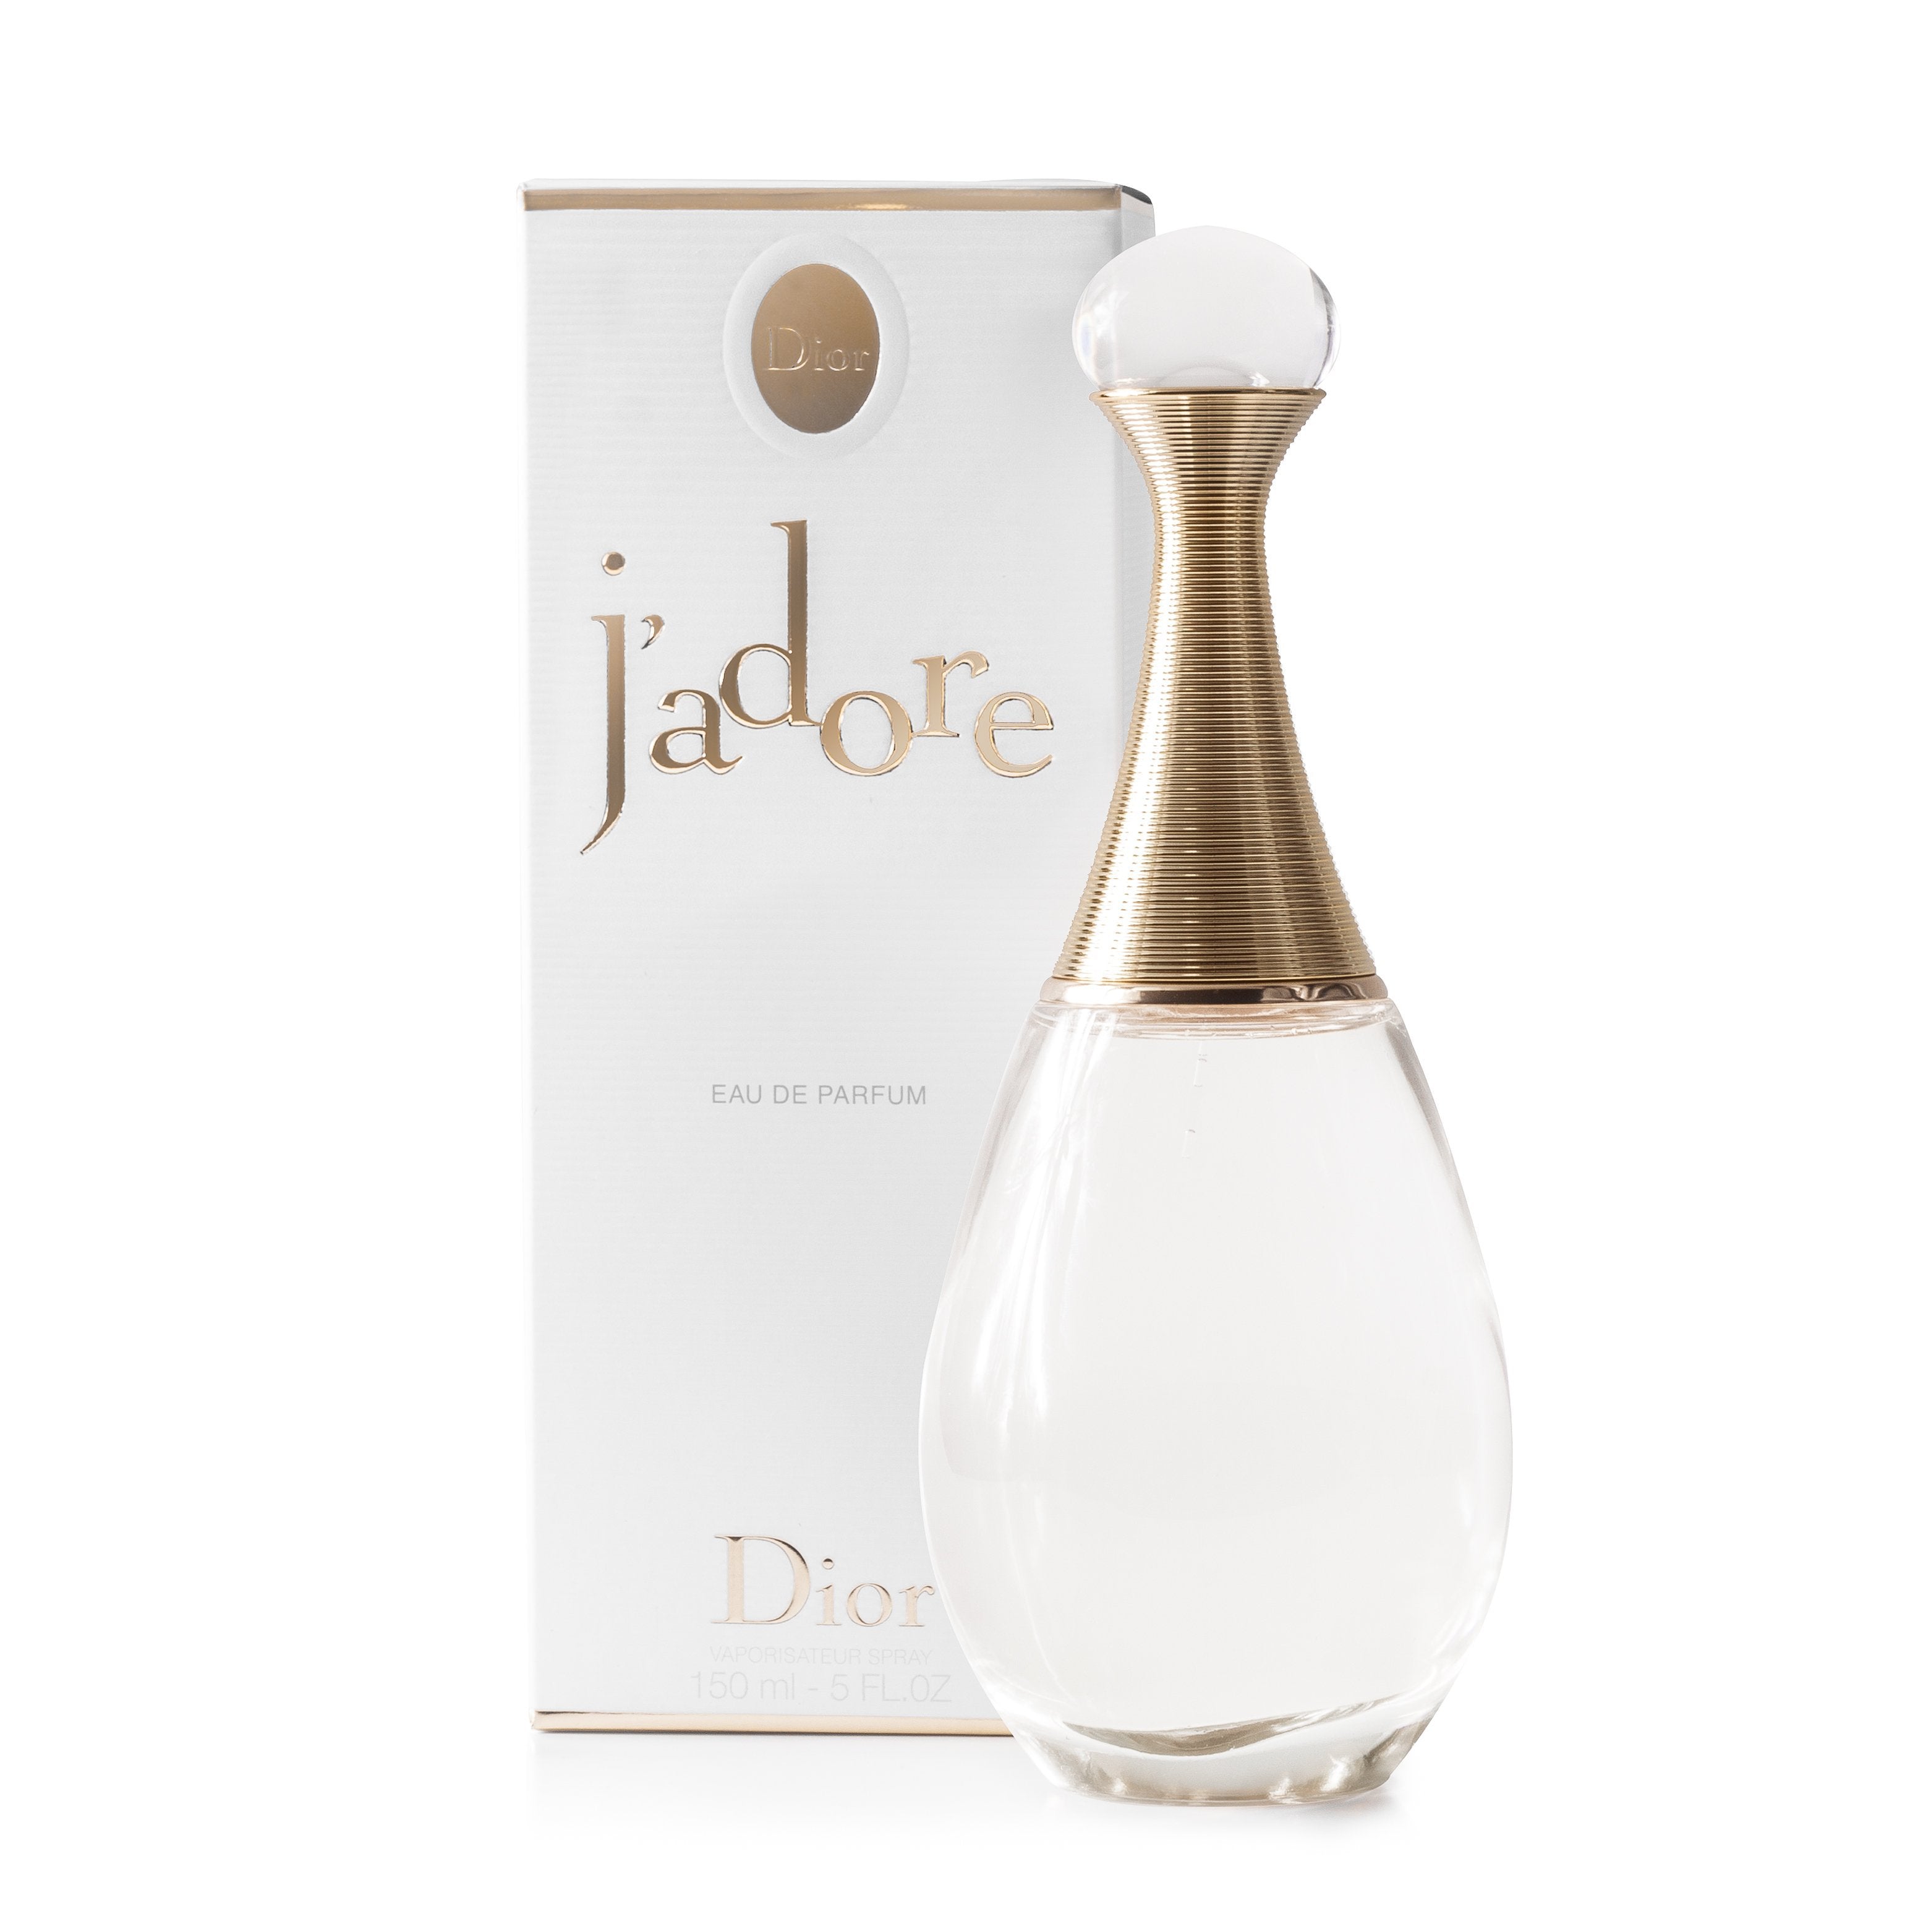 Jadore Parfum d'eau by Christian Dior Eau de Parfum Spray 1.7 oz